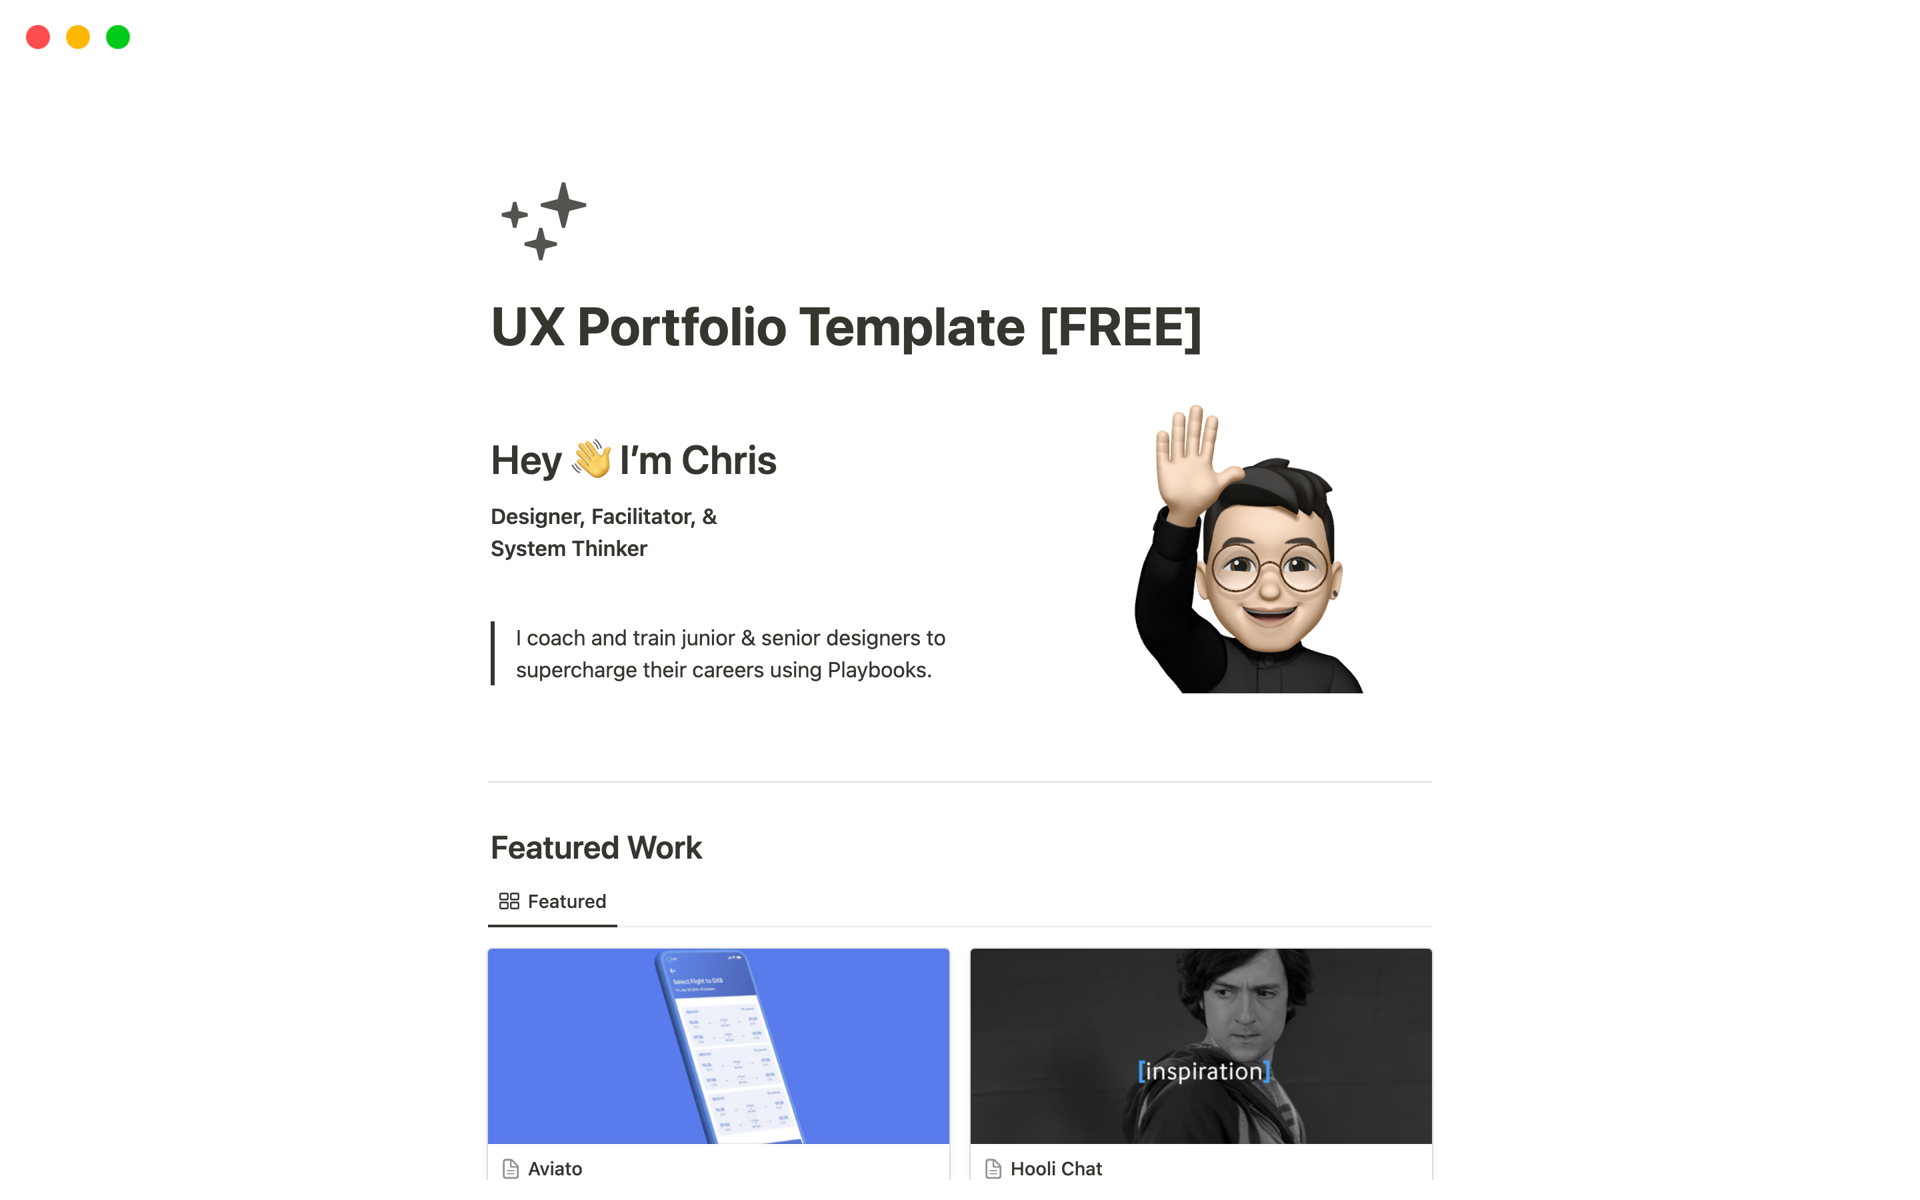 A template preview for UX Portfolio